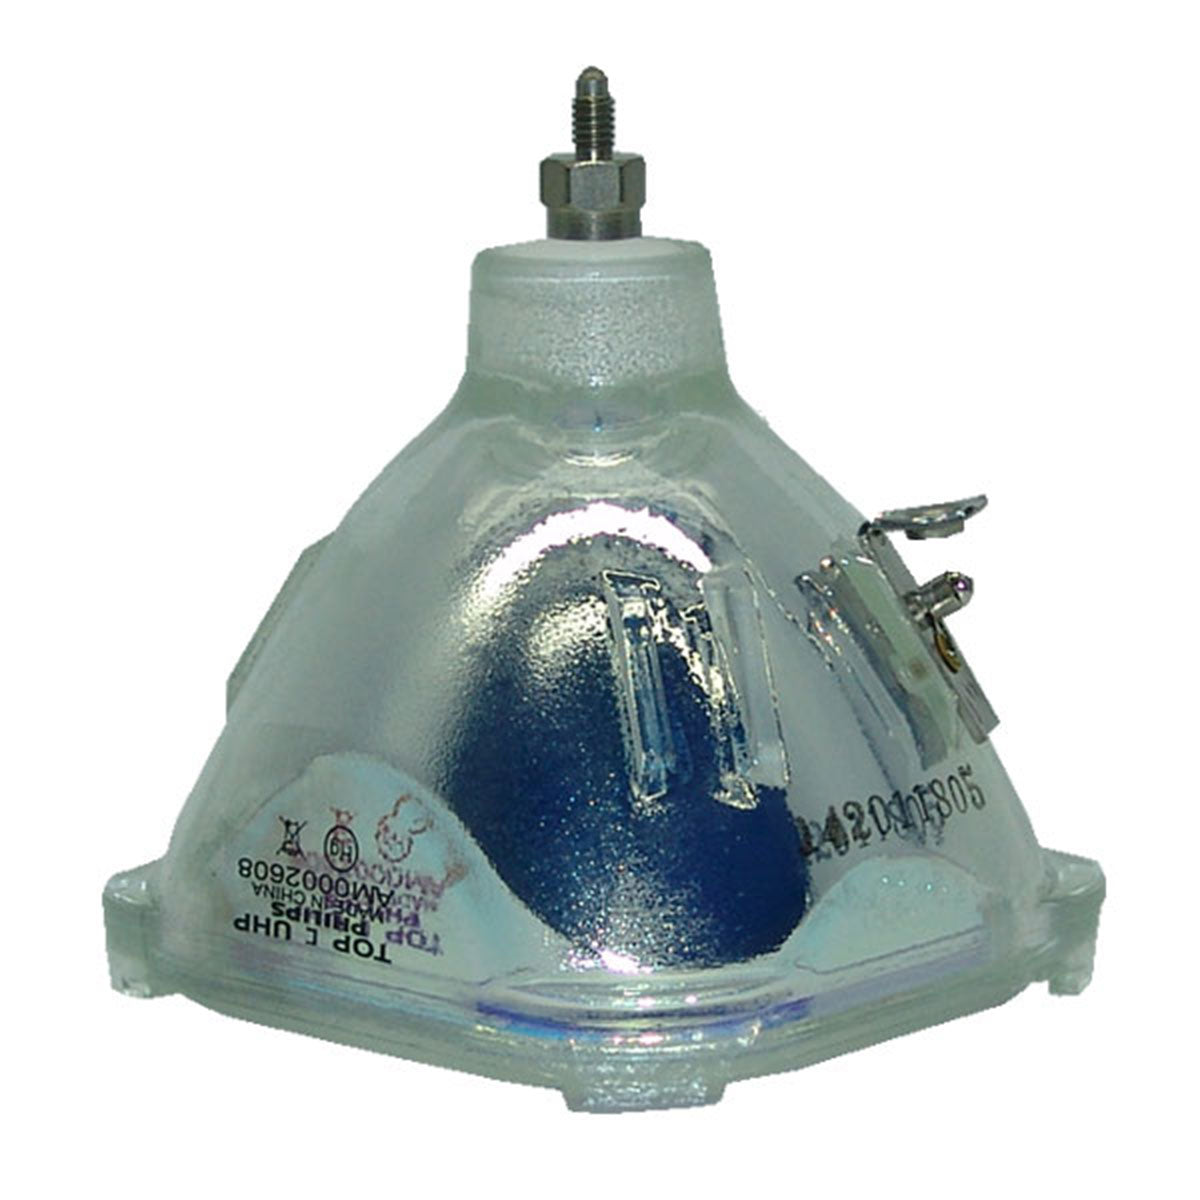 Dukane 456-204 Philips Projector Bare Lamp